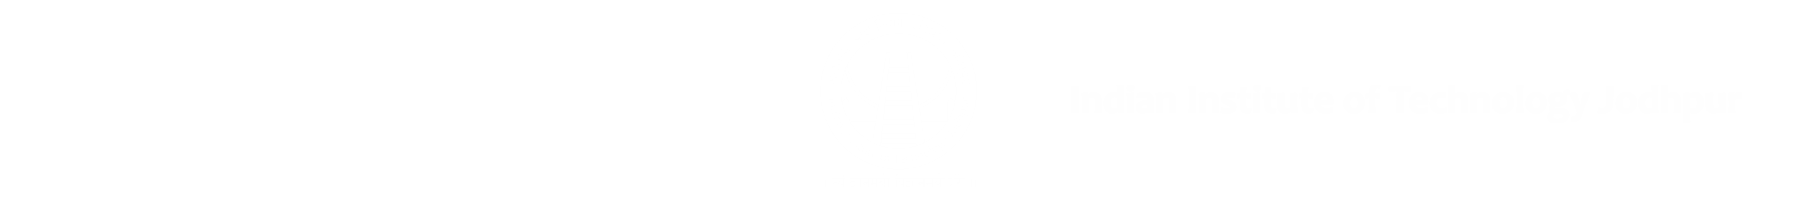 Indian Institute of Technology Jodhpur-logo